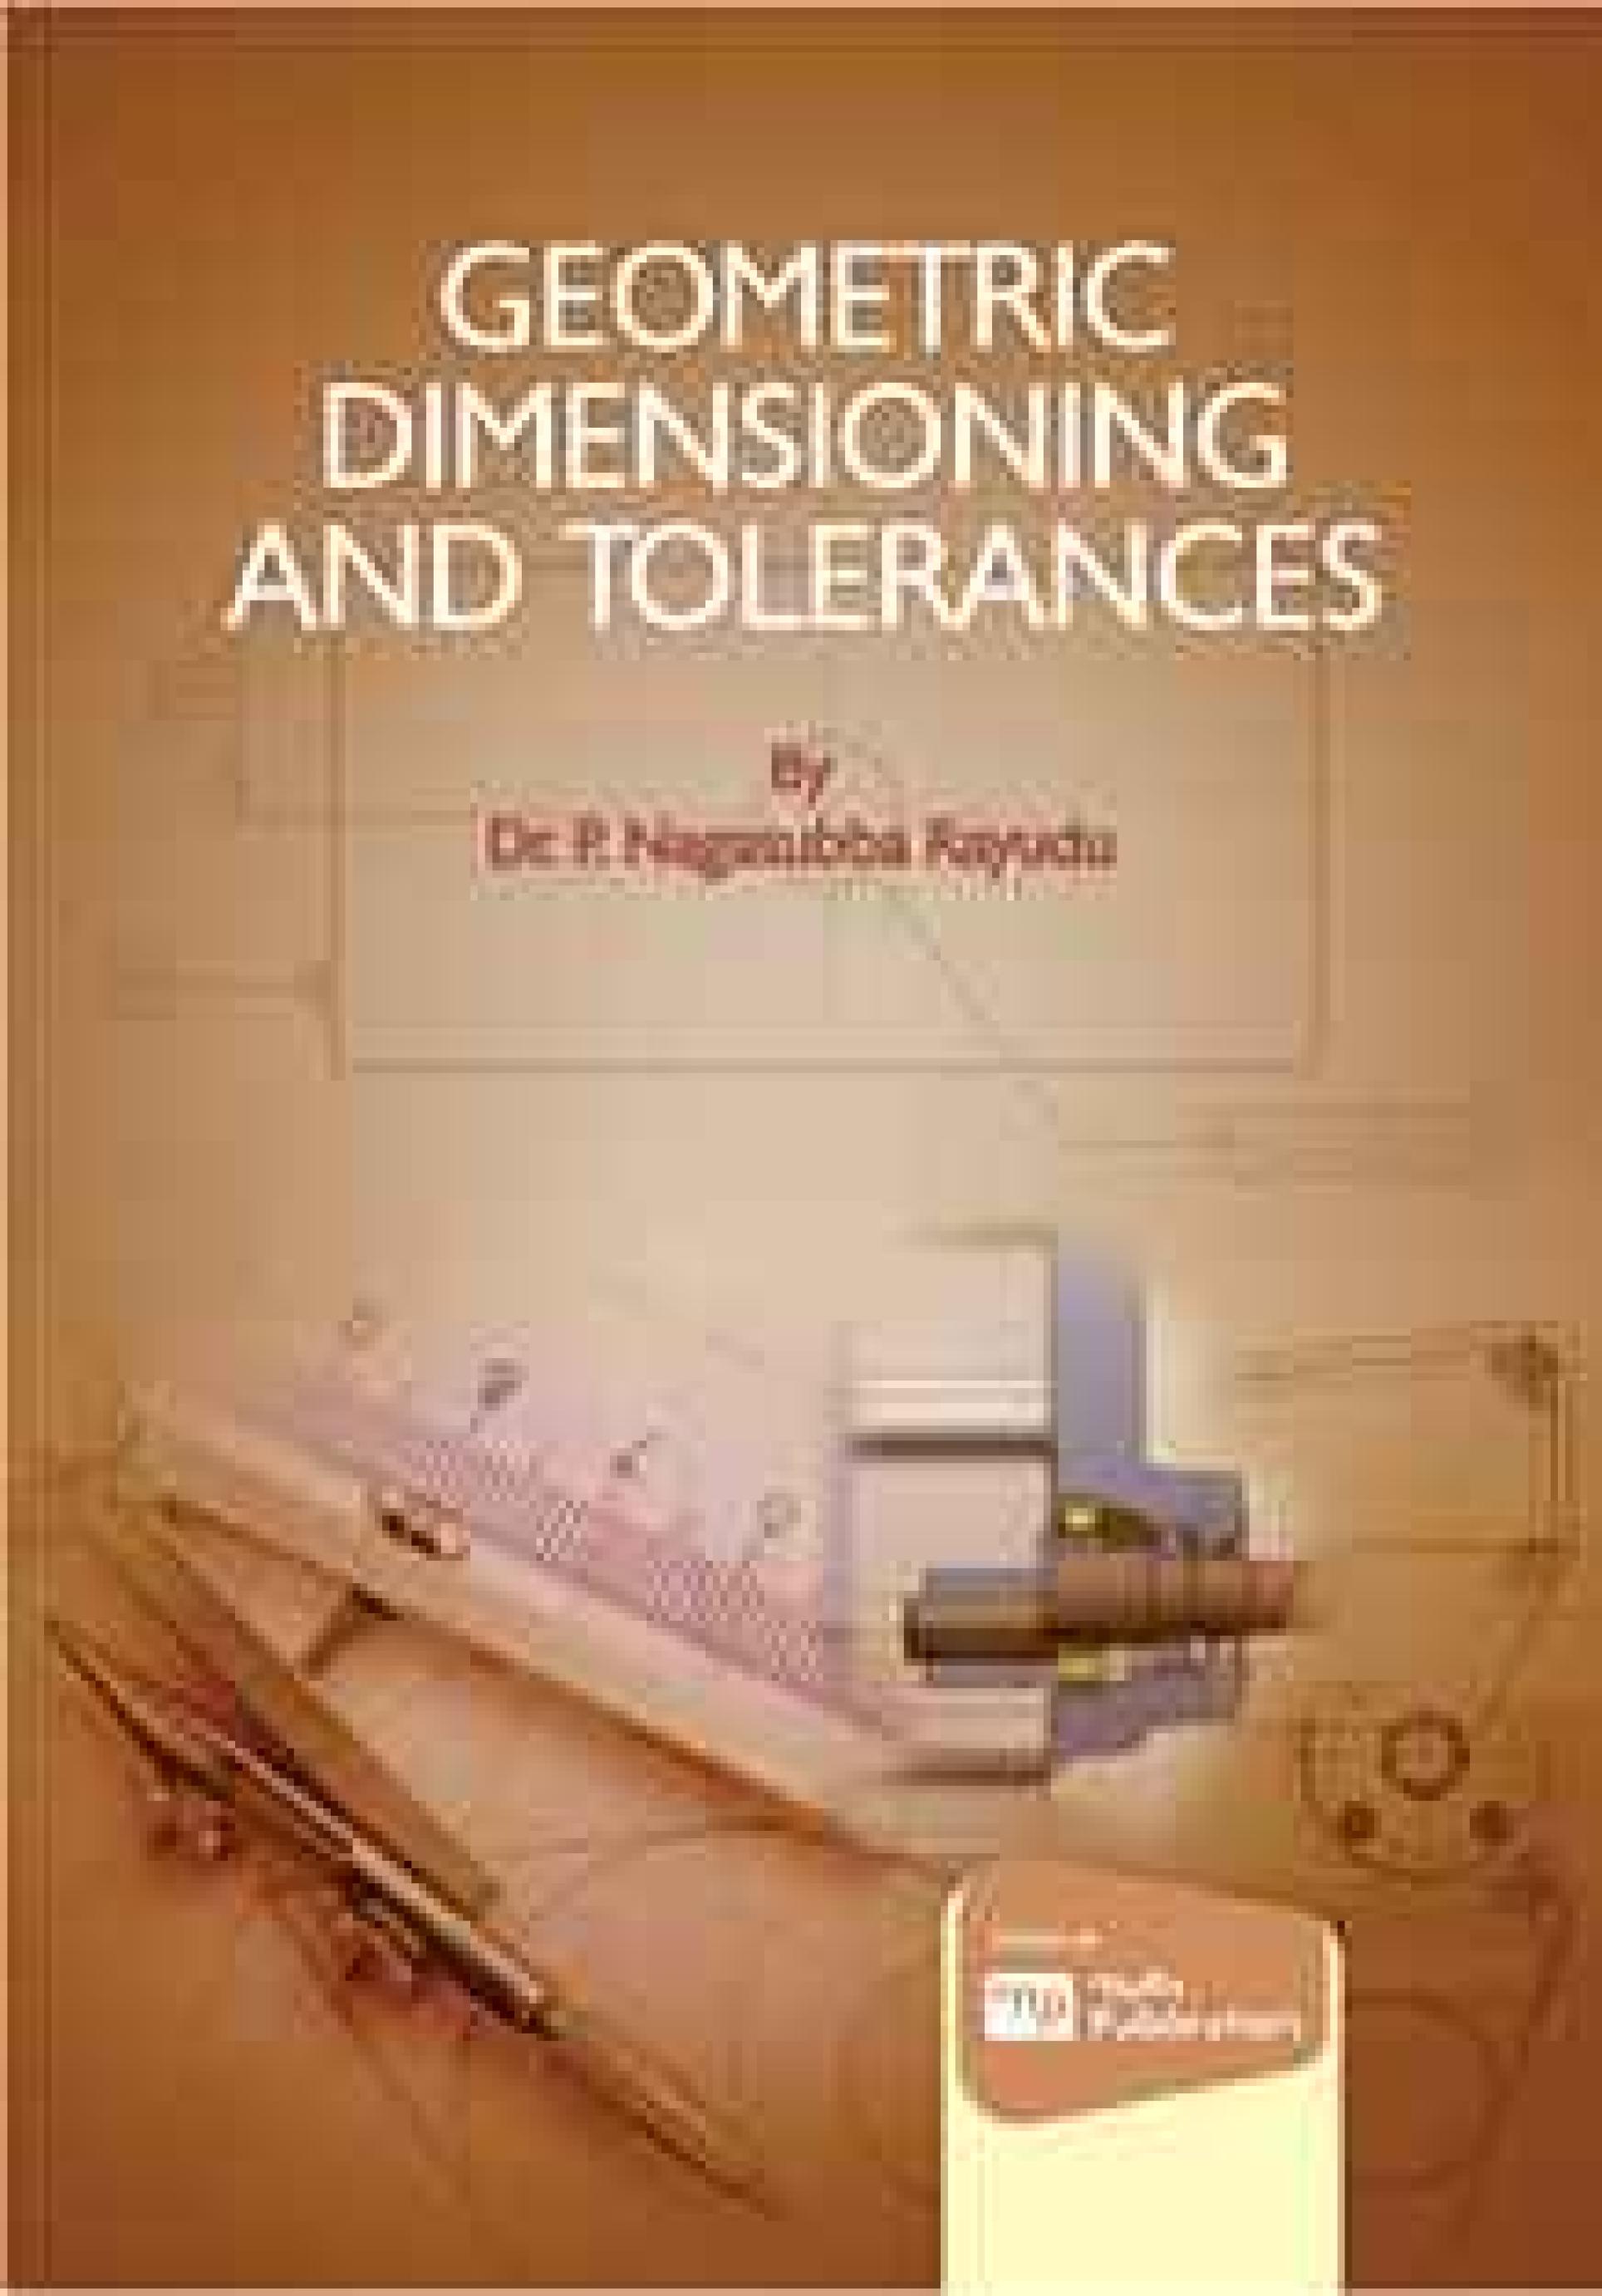 Geometric Dimensioning and Tolerances